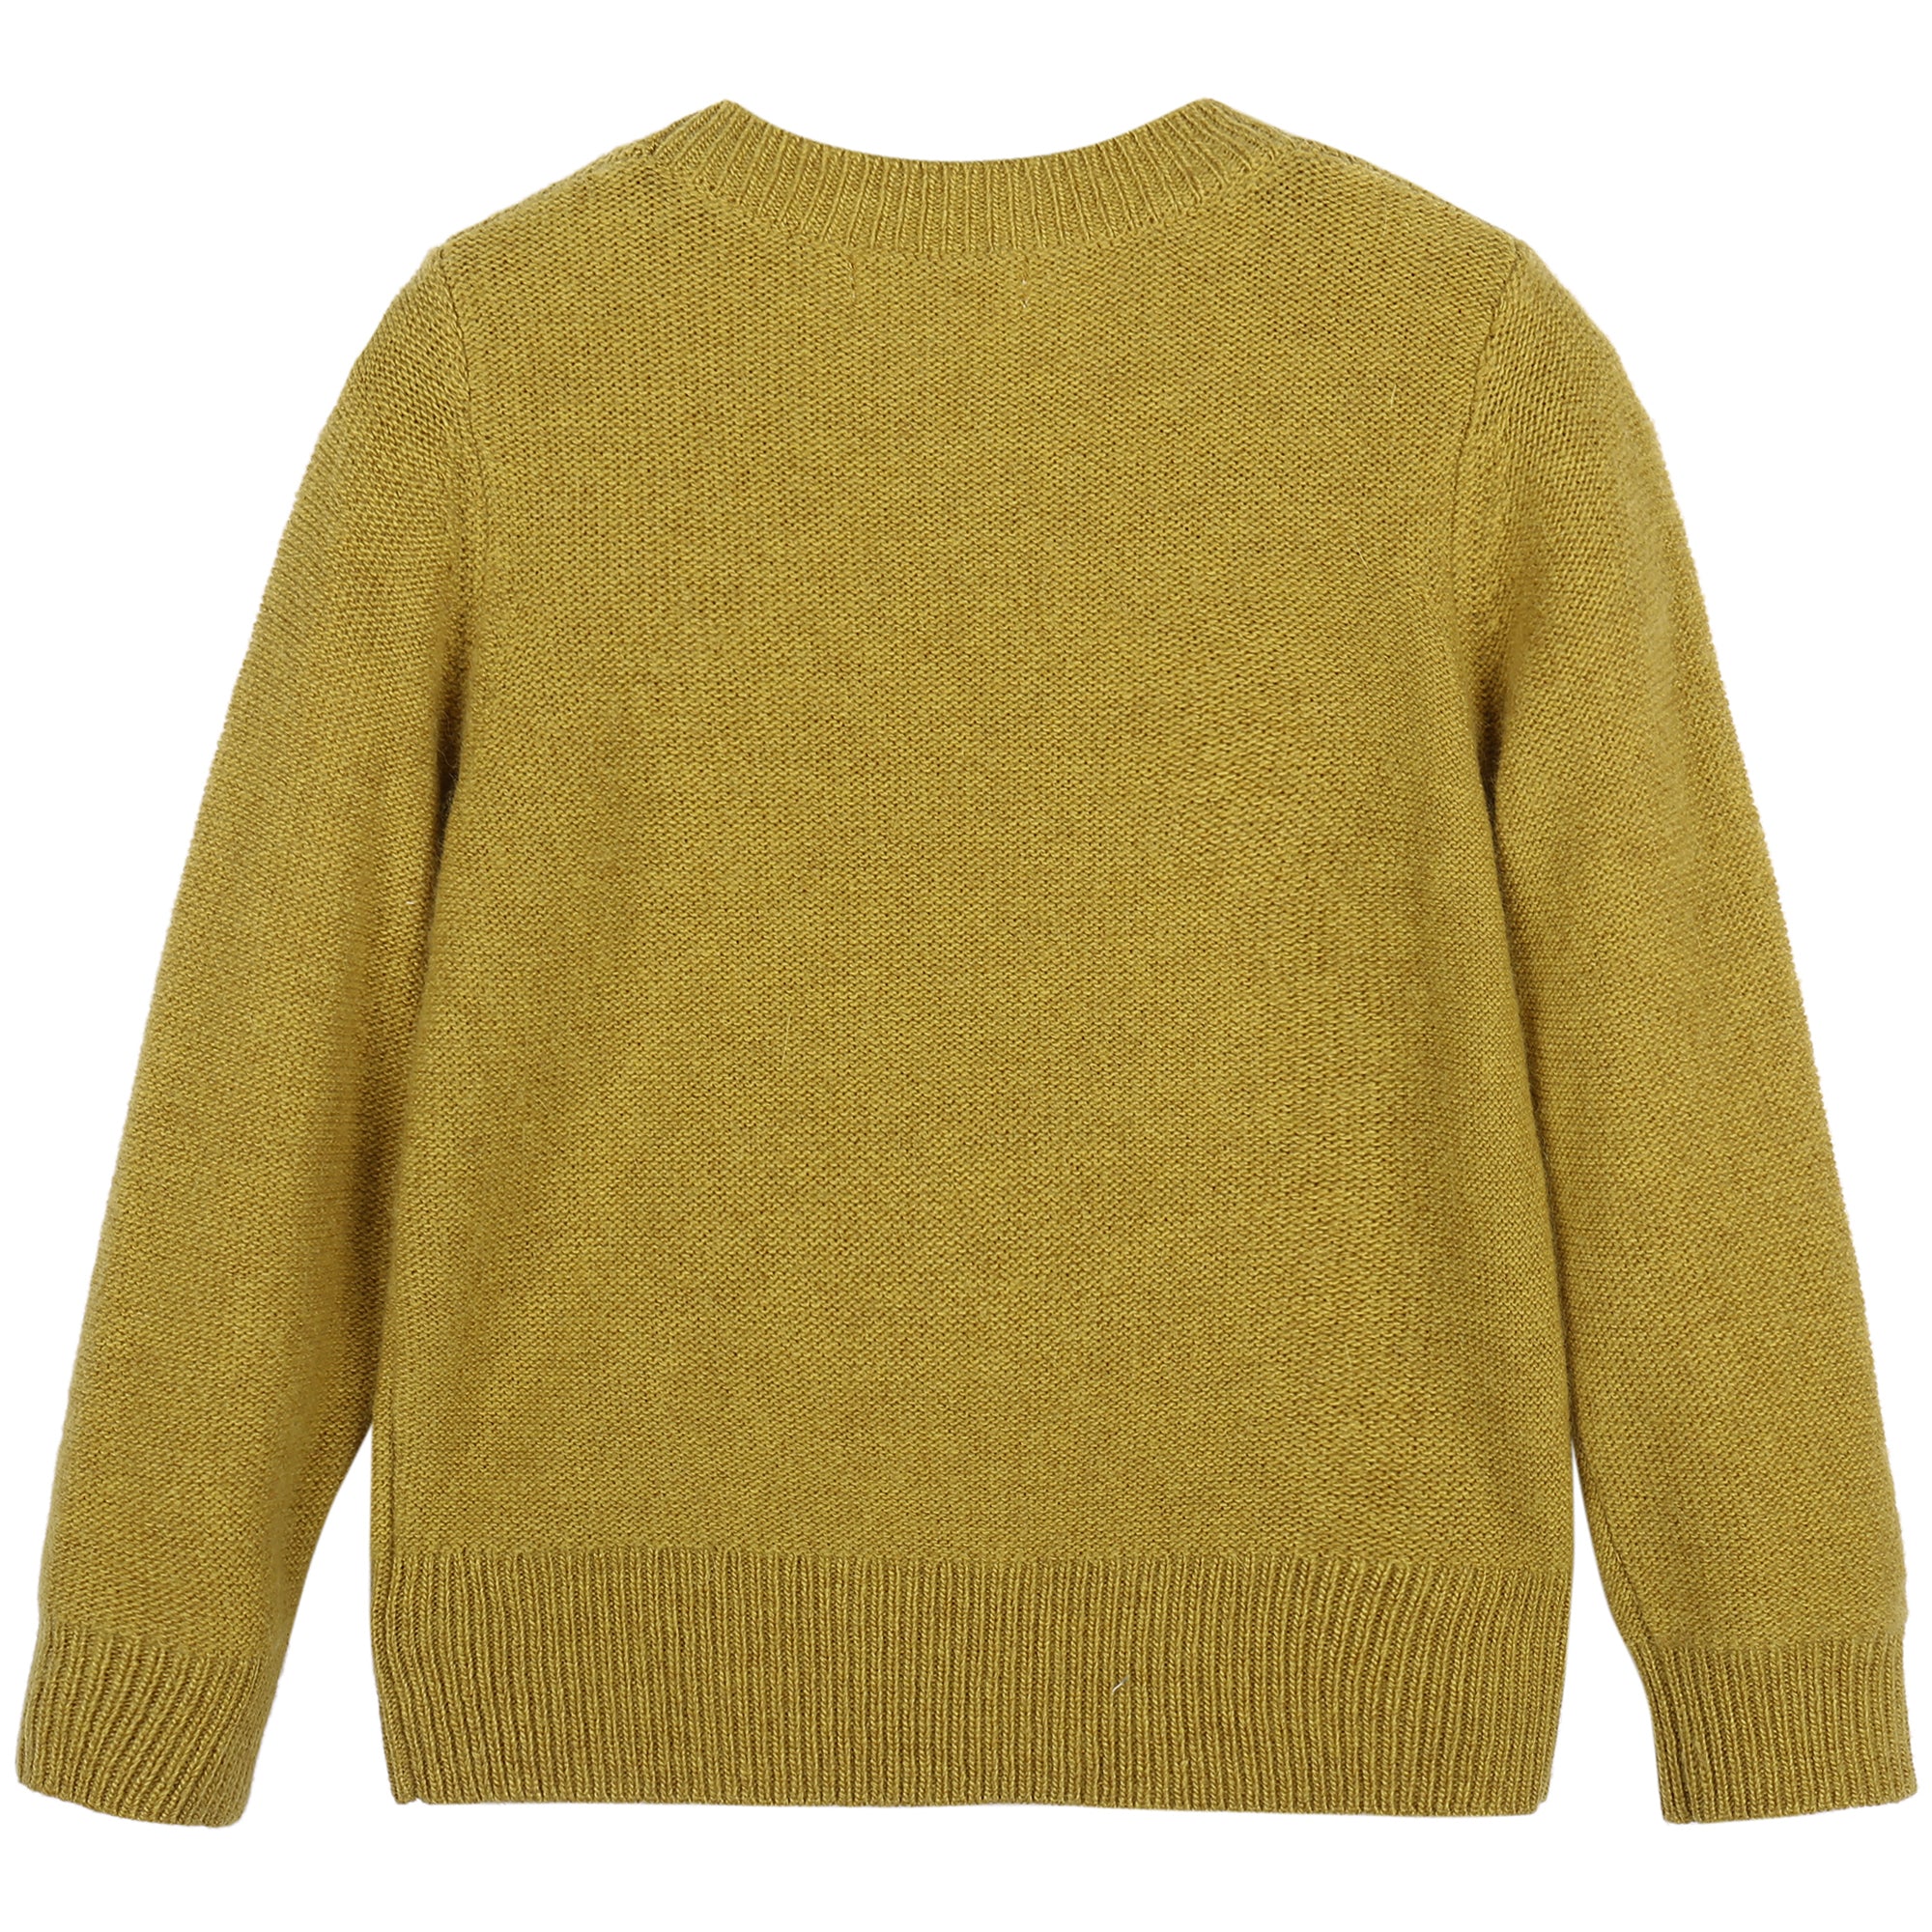 Boys & Girls Yellow Knitted Sweater